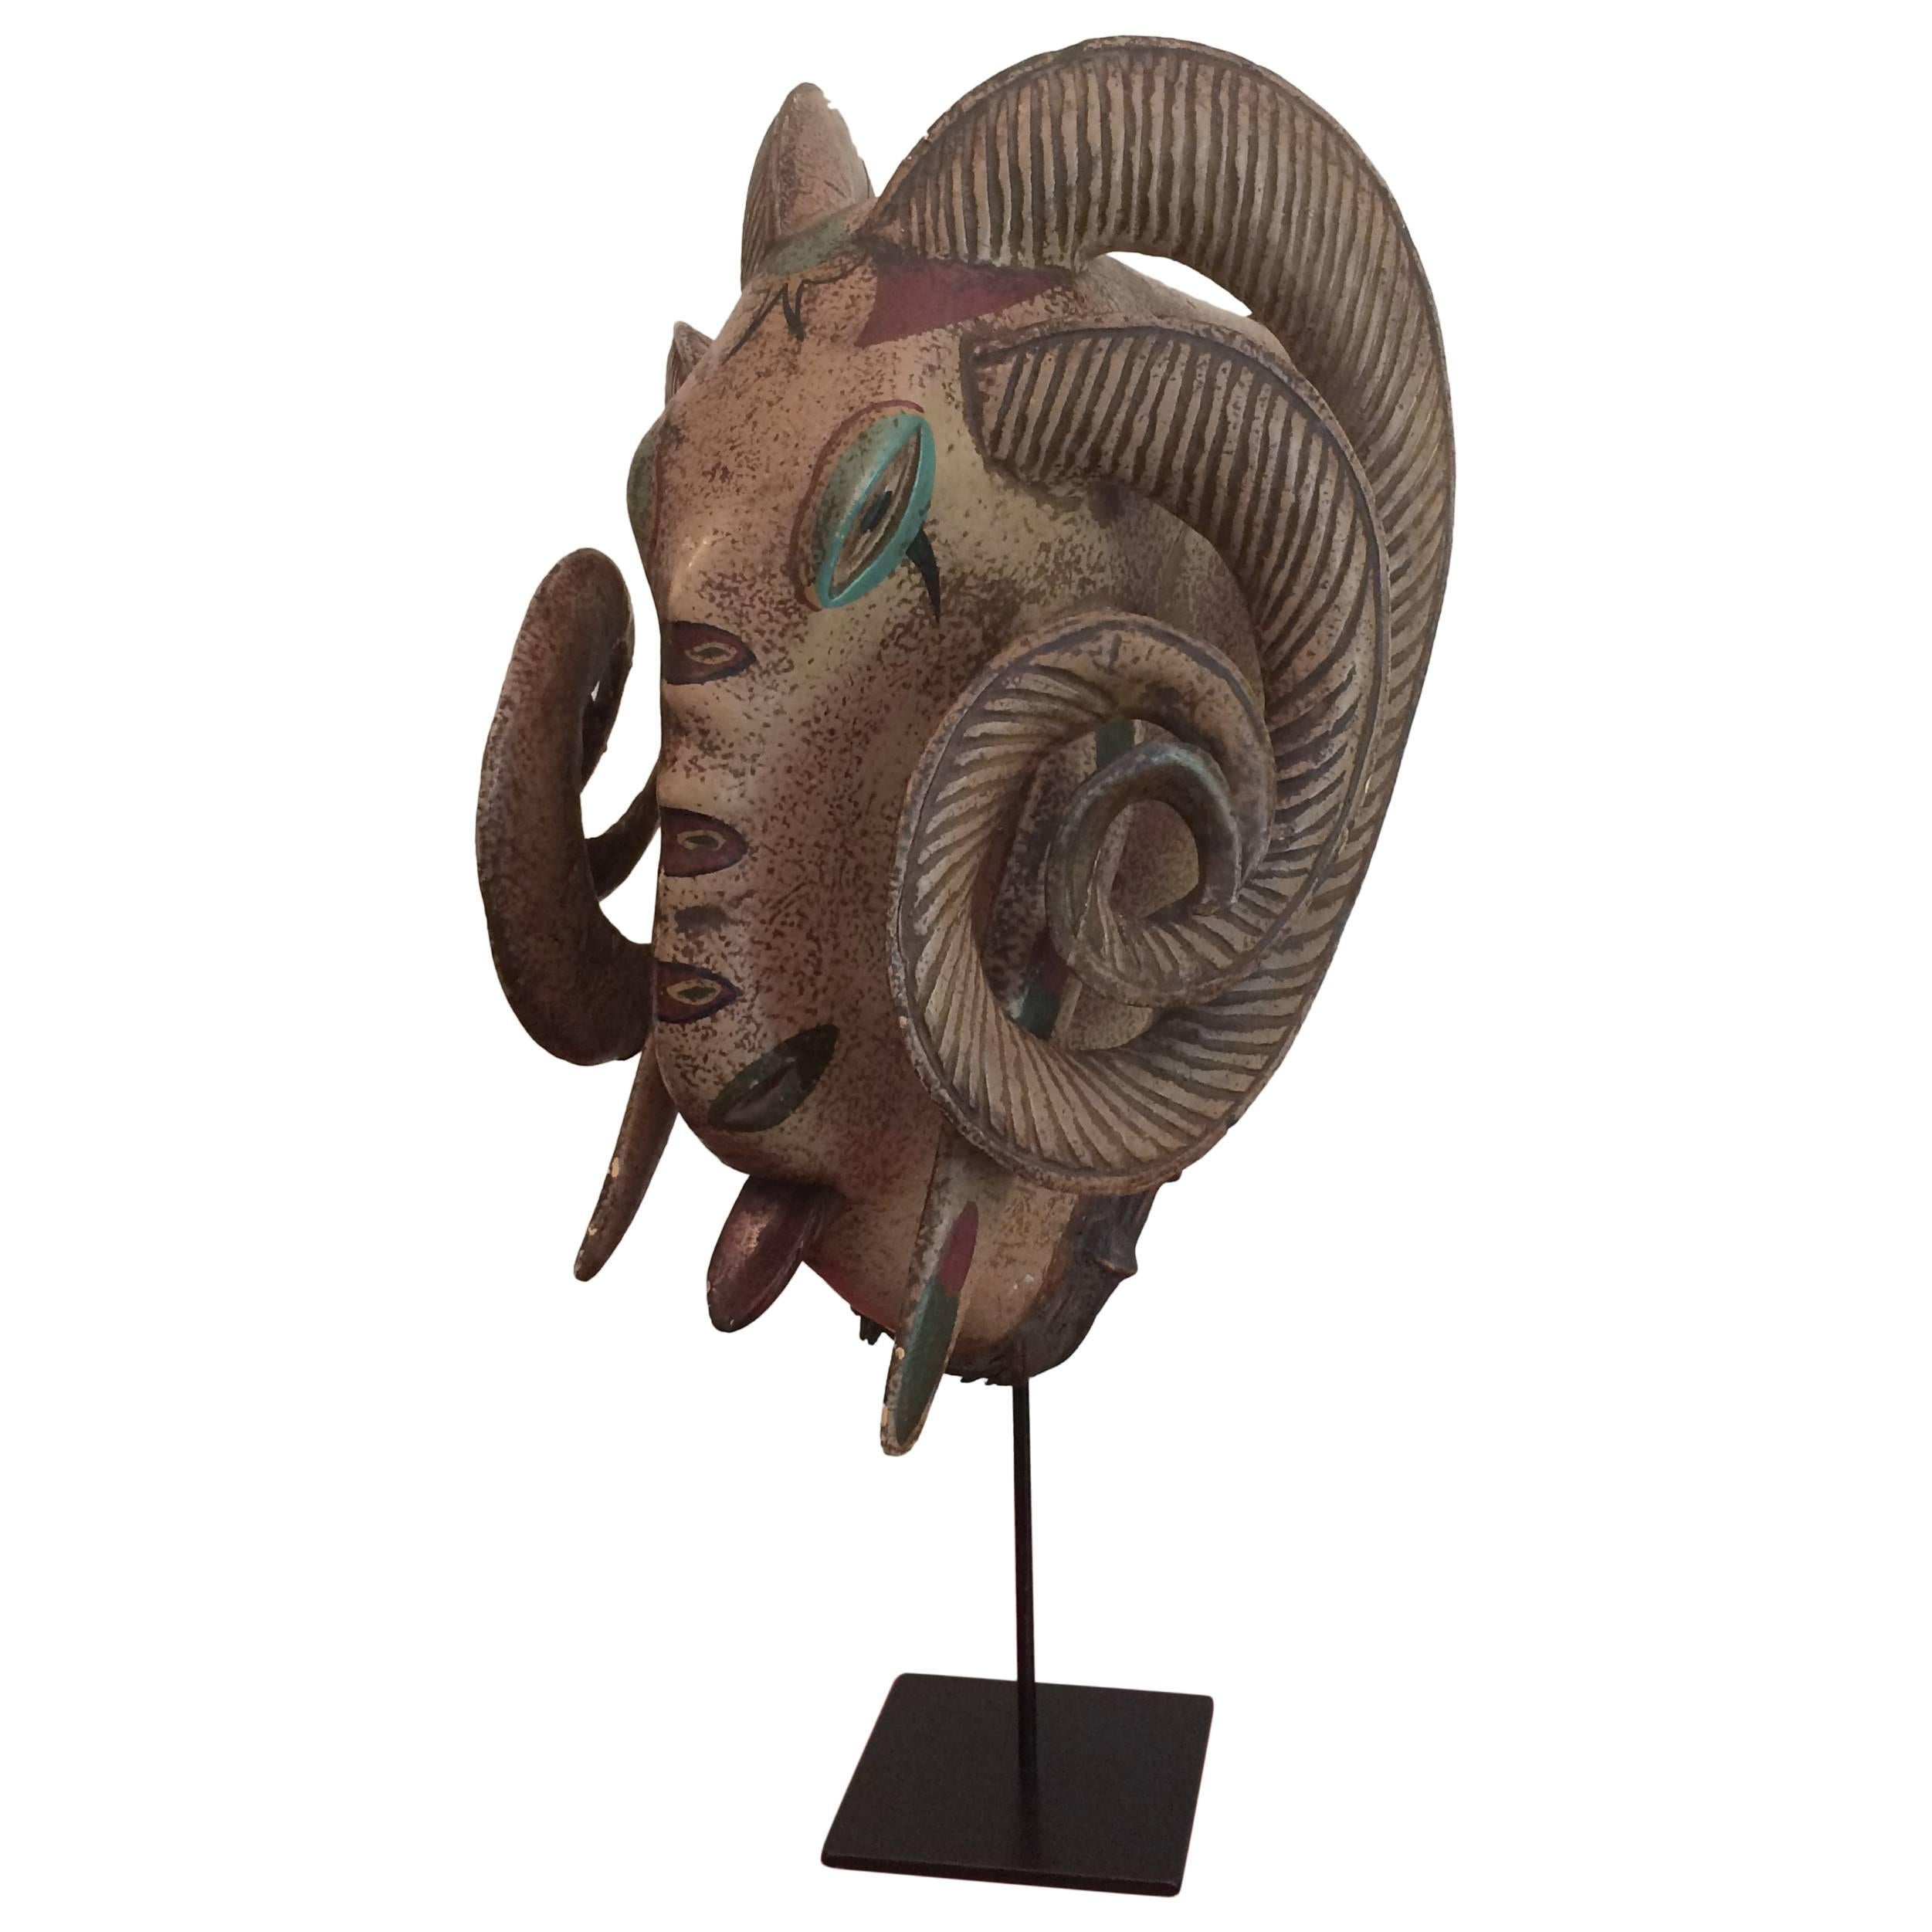 Impressive Ram Head Mask from the Ivory Coast